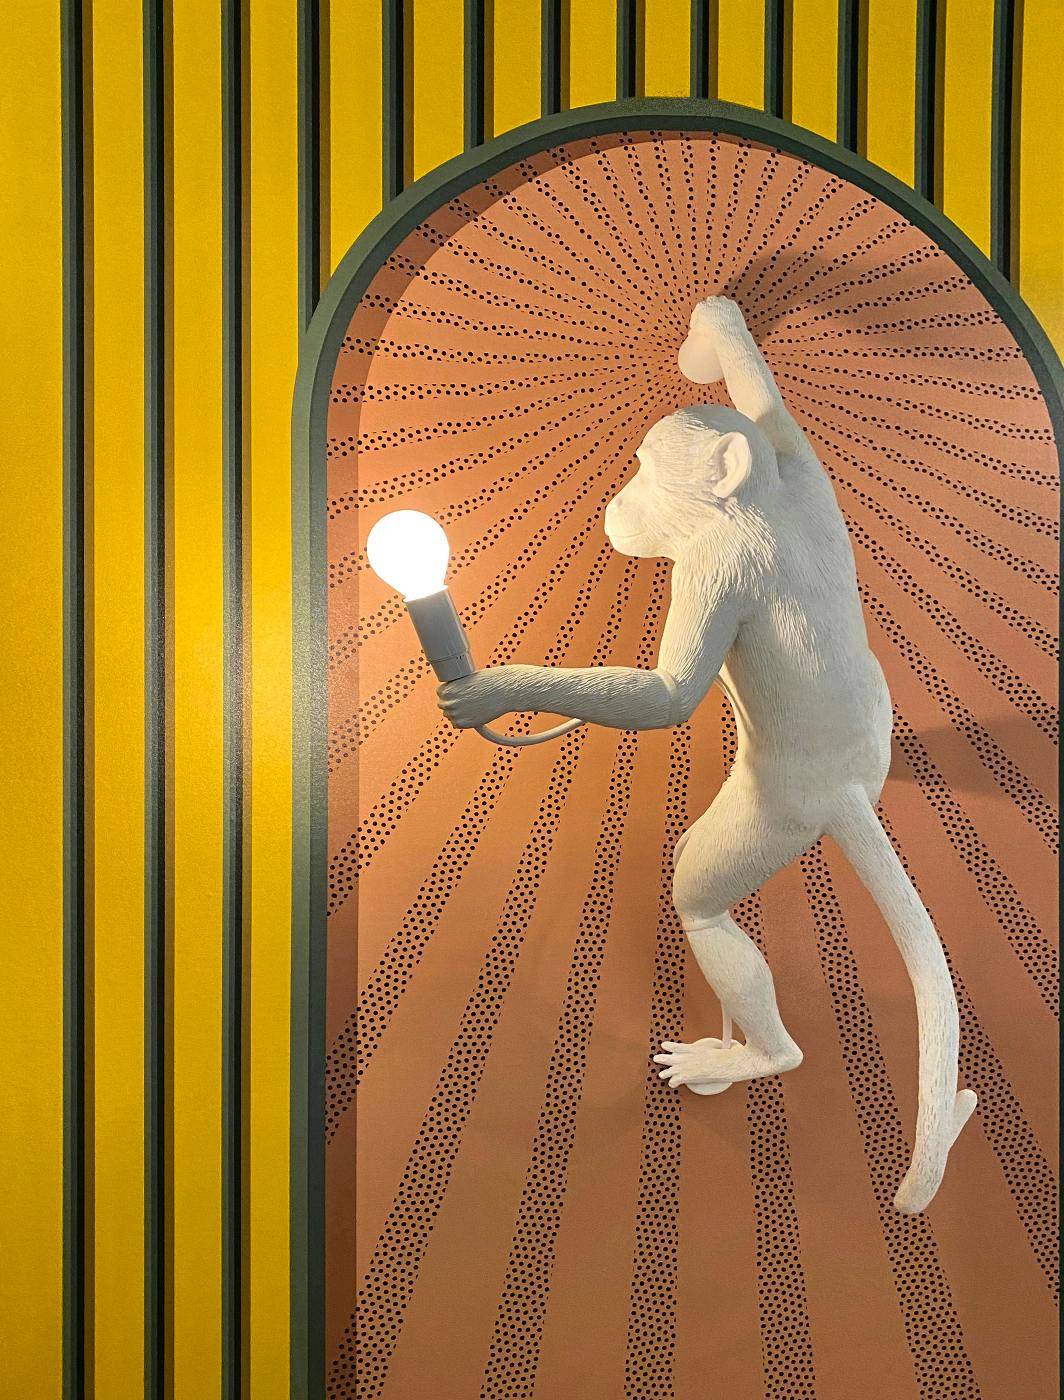 A plaster monkey climbing a wall holding a light bulb